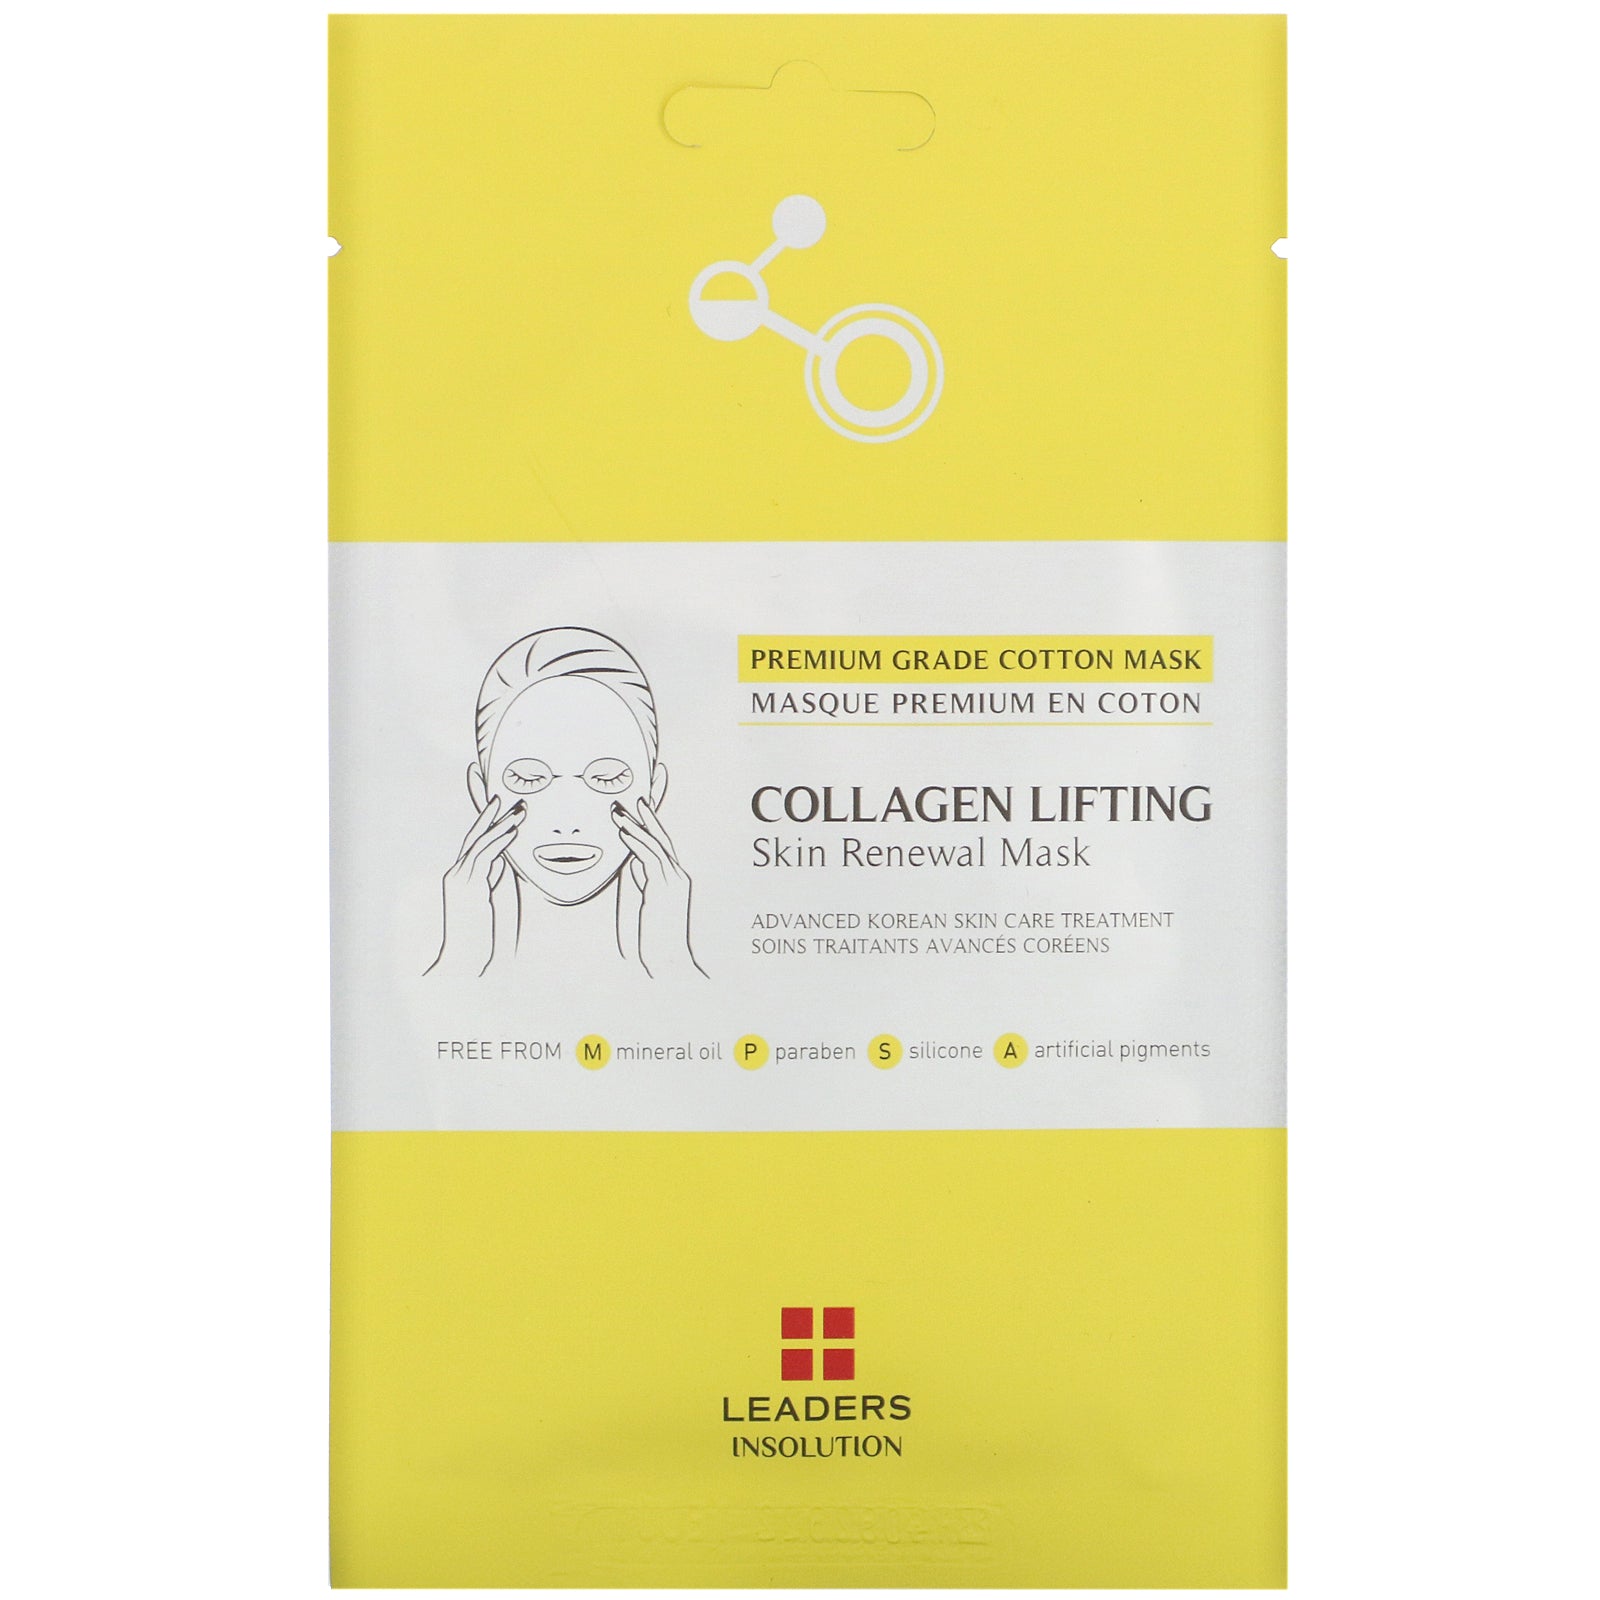 Leaders, Collagen Lifting, Skin Renewal Mask, 1 Sheet, 0.84 fl oz (25 ml)